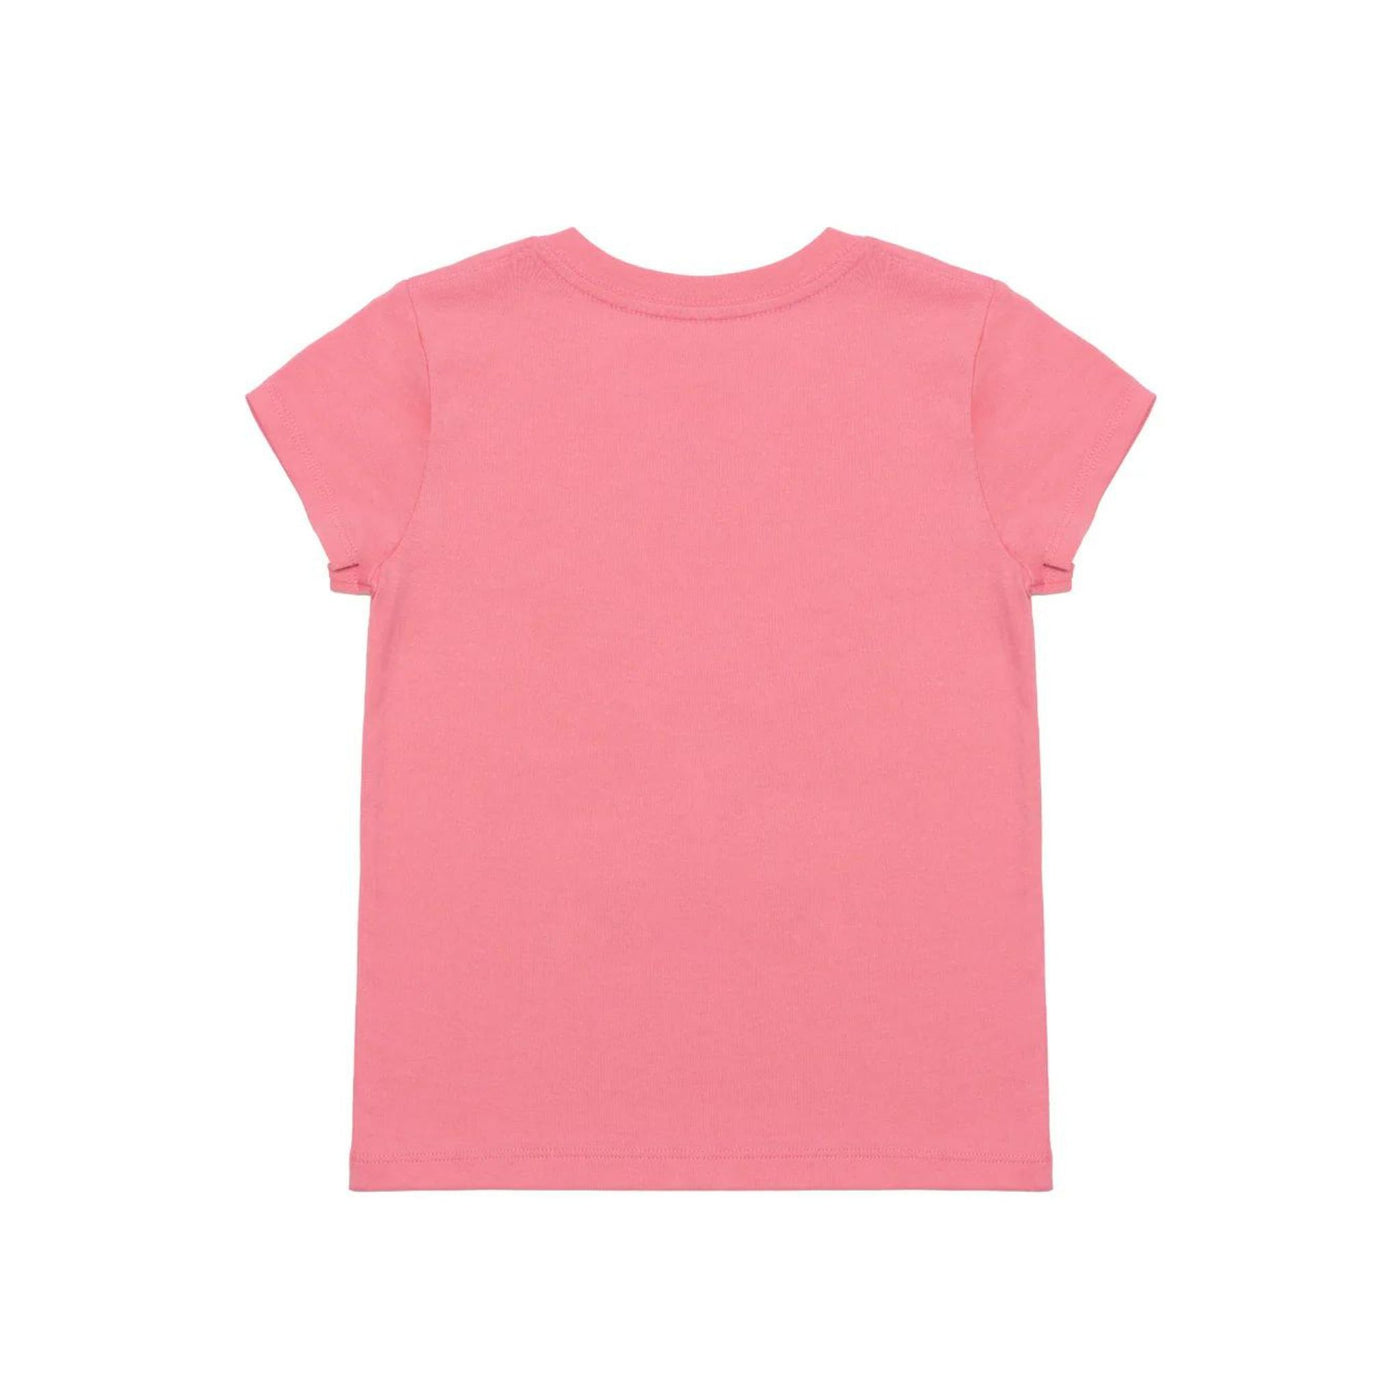 T-shirt Bambina a mezza manica con logo multicolore e scollatura girocollo